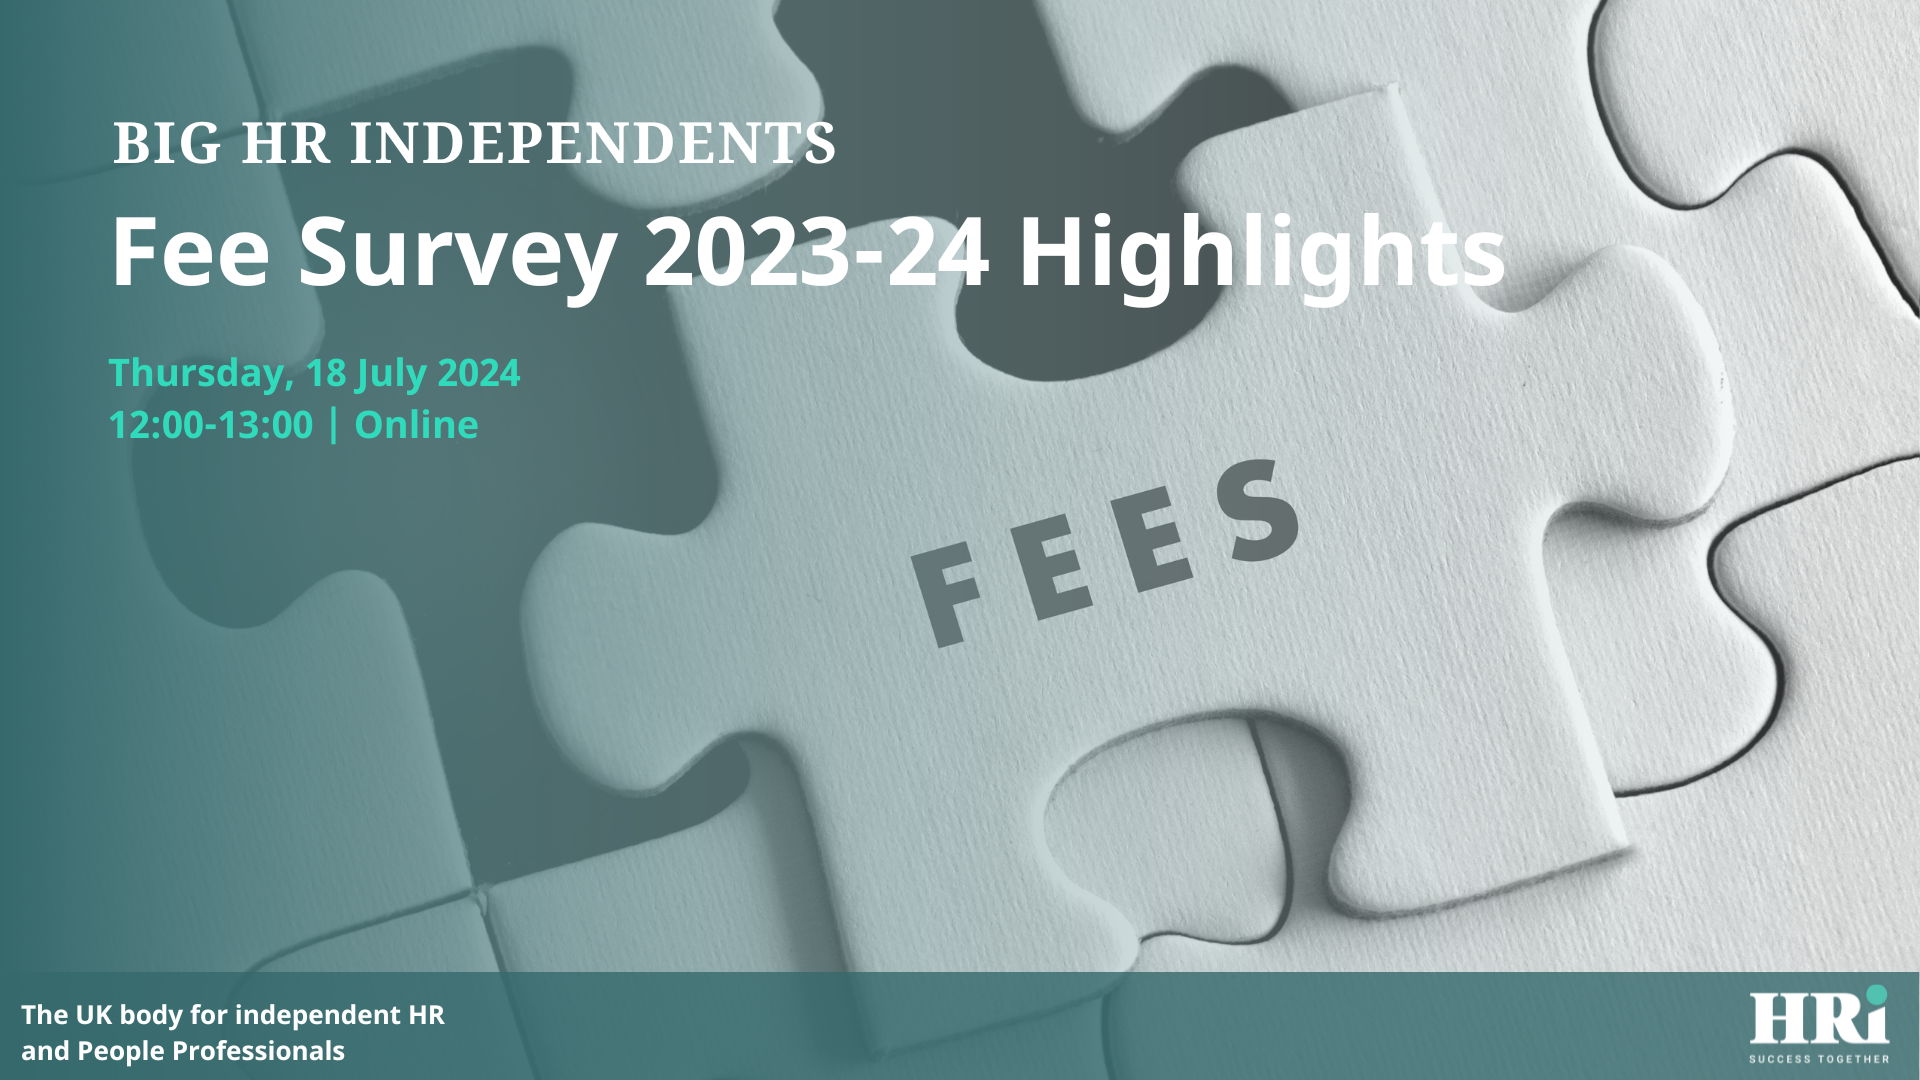 Big HR Independent Fee Survey Highlights